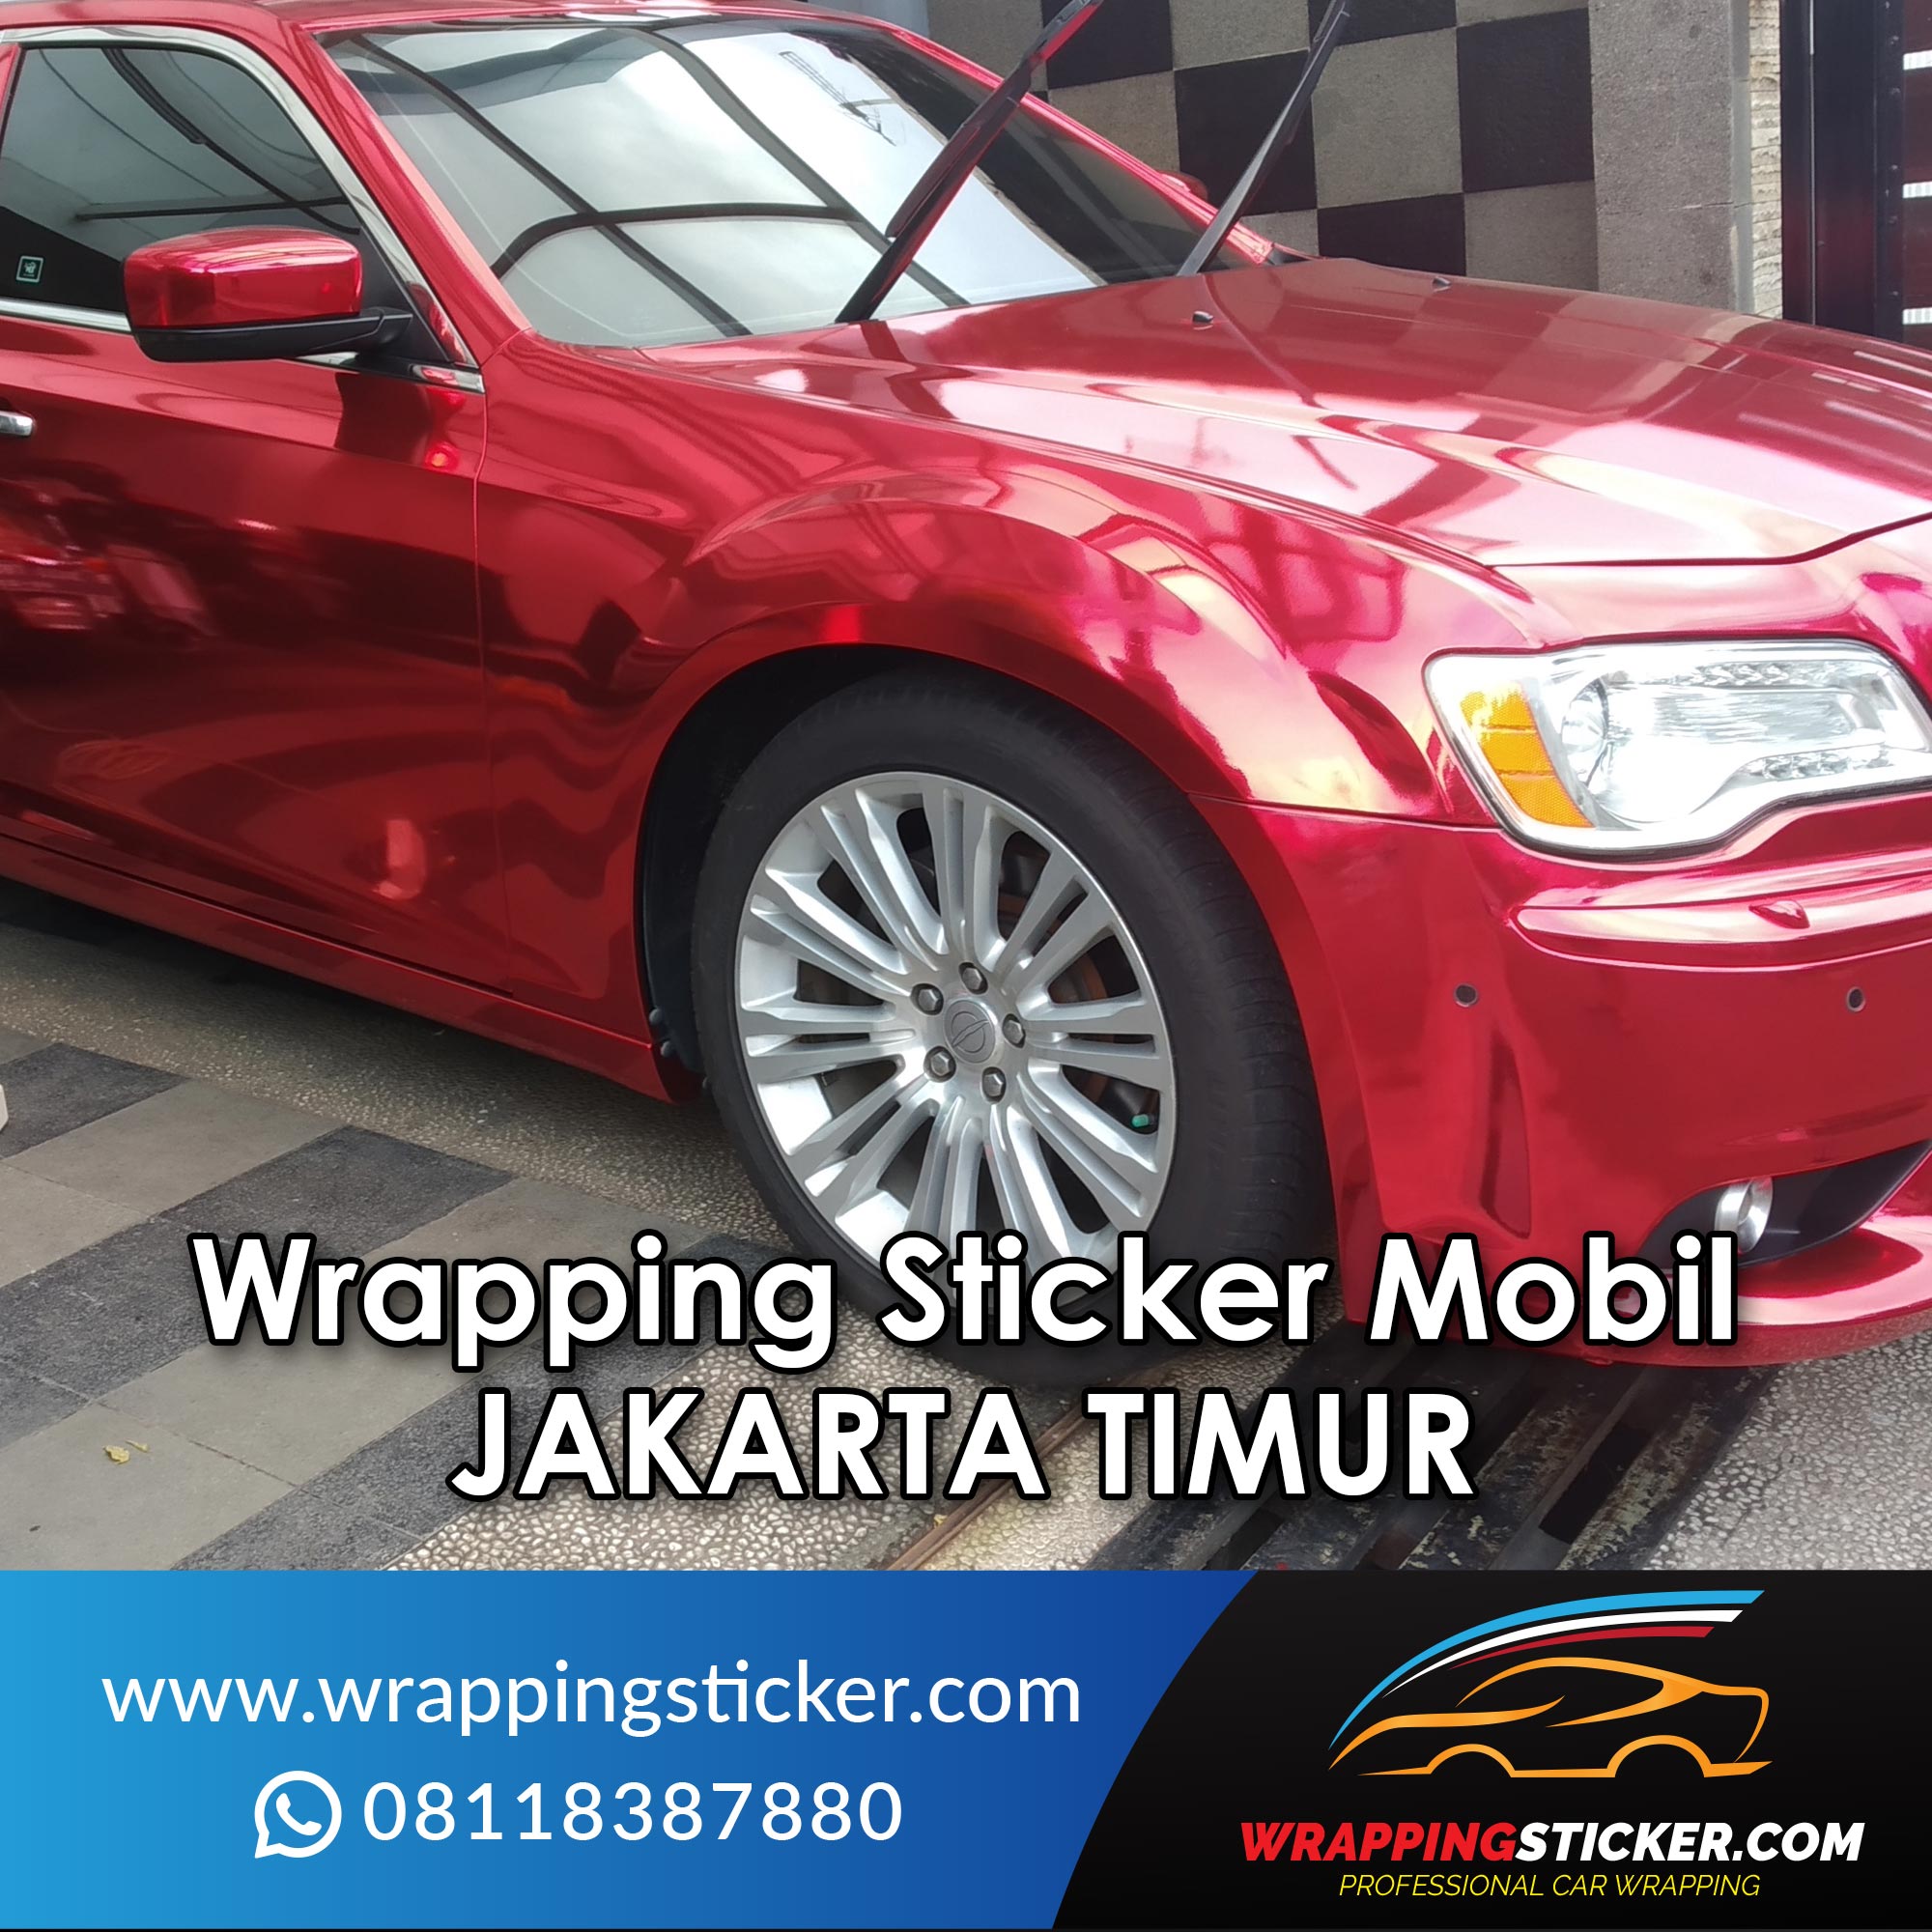 Wrapping Sticker Mobil Jakarta Timur